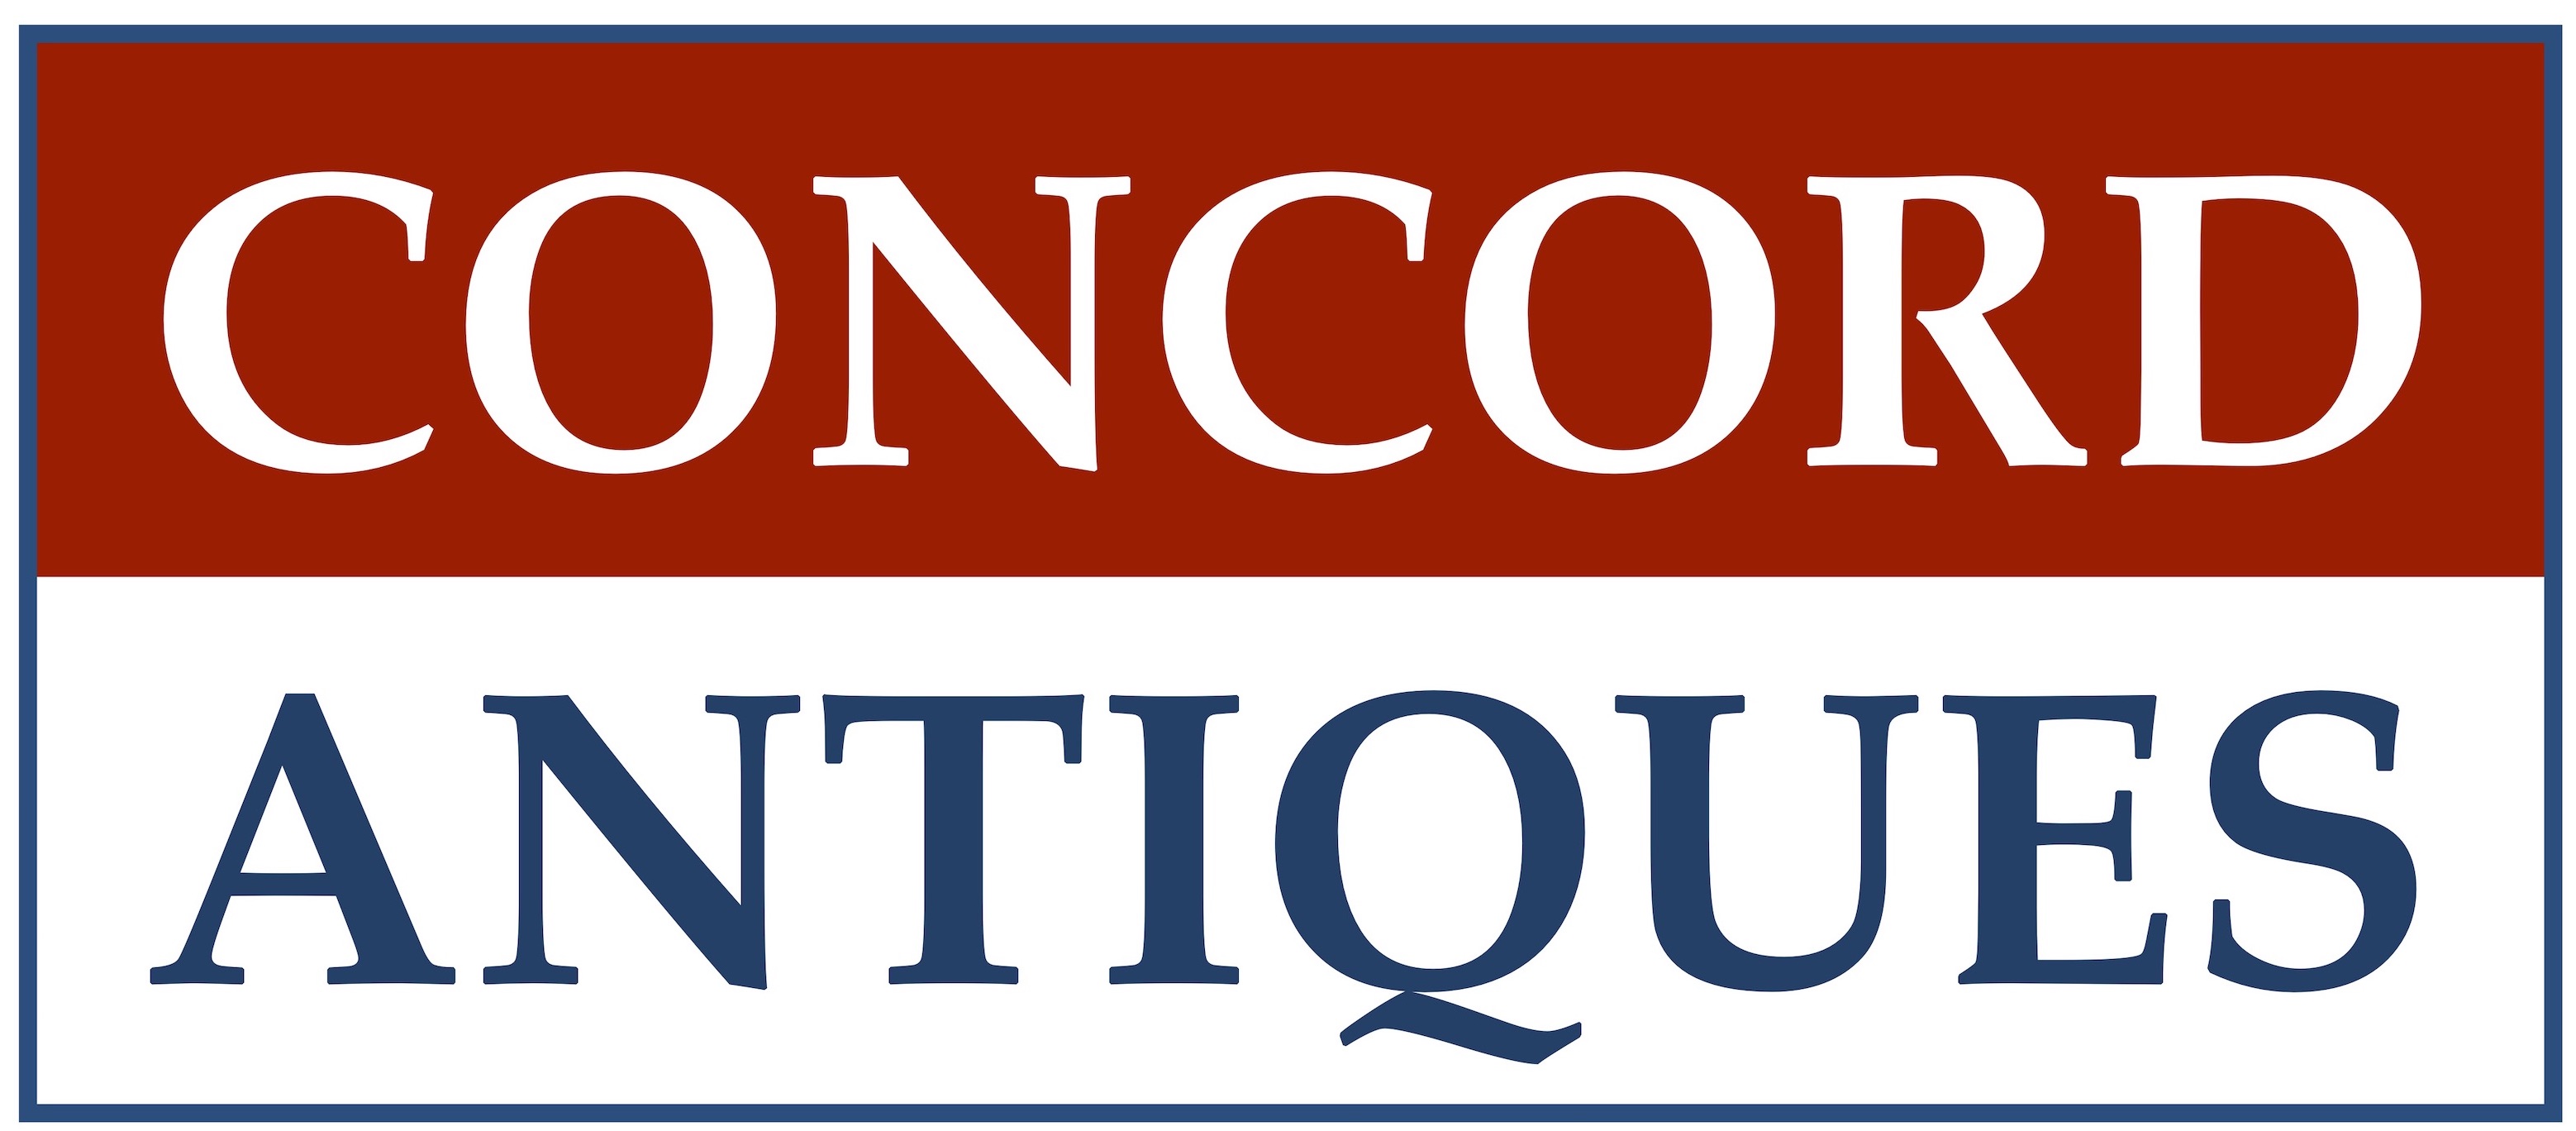 Concord Antiques logo